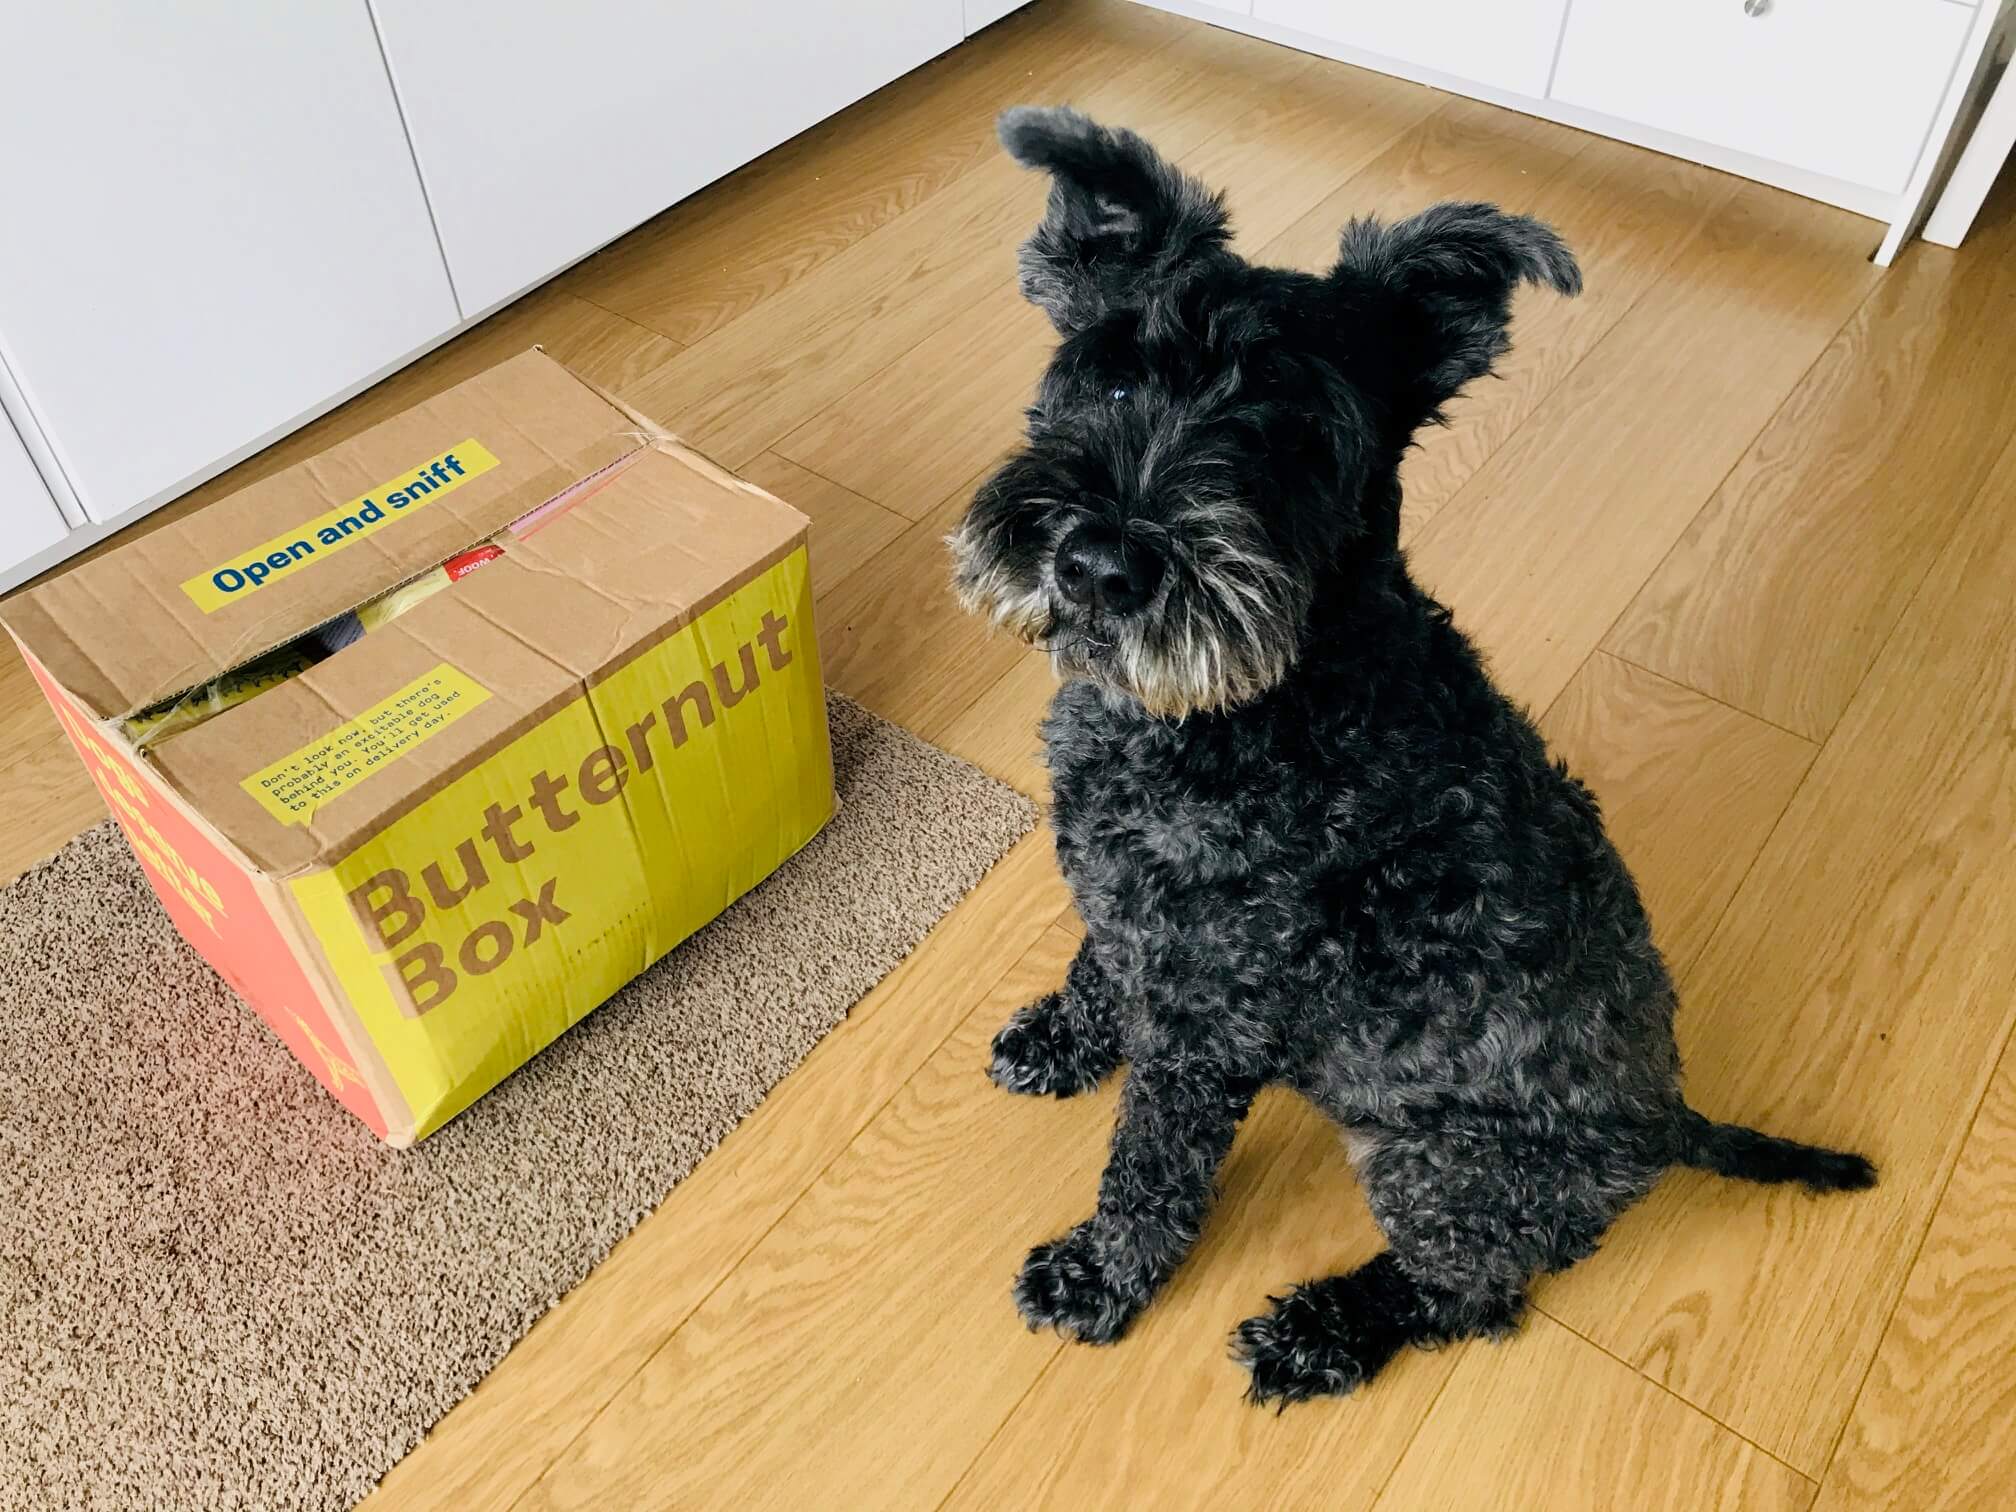 A black dog with a yellow cardboard box